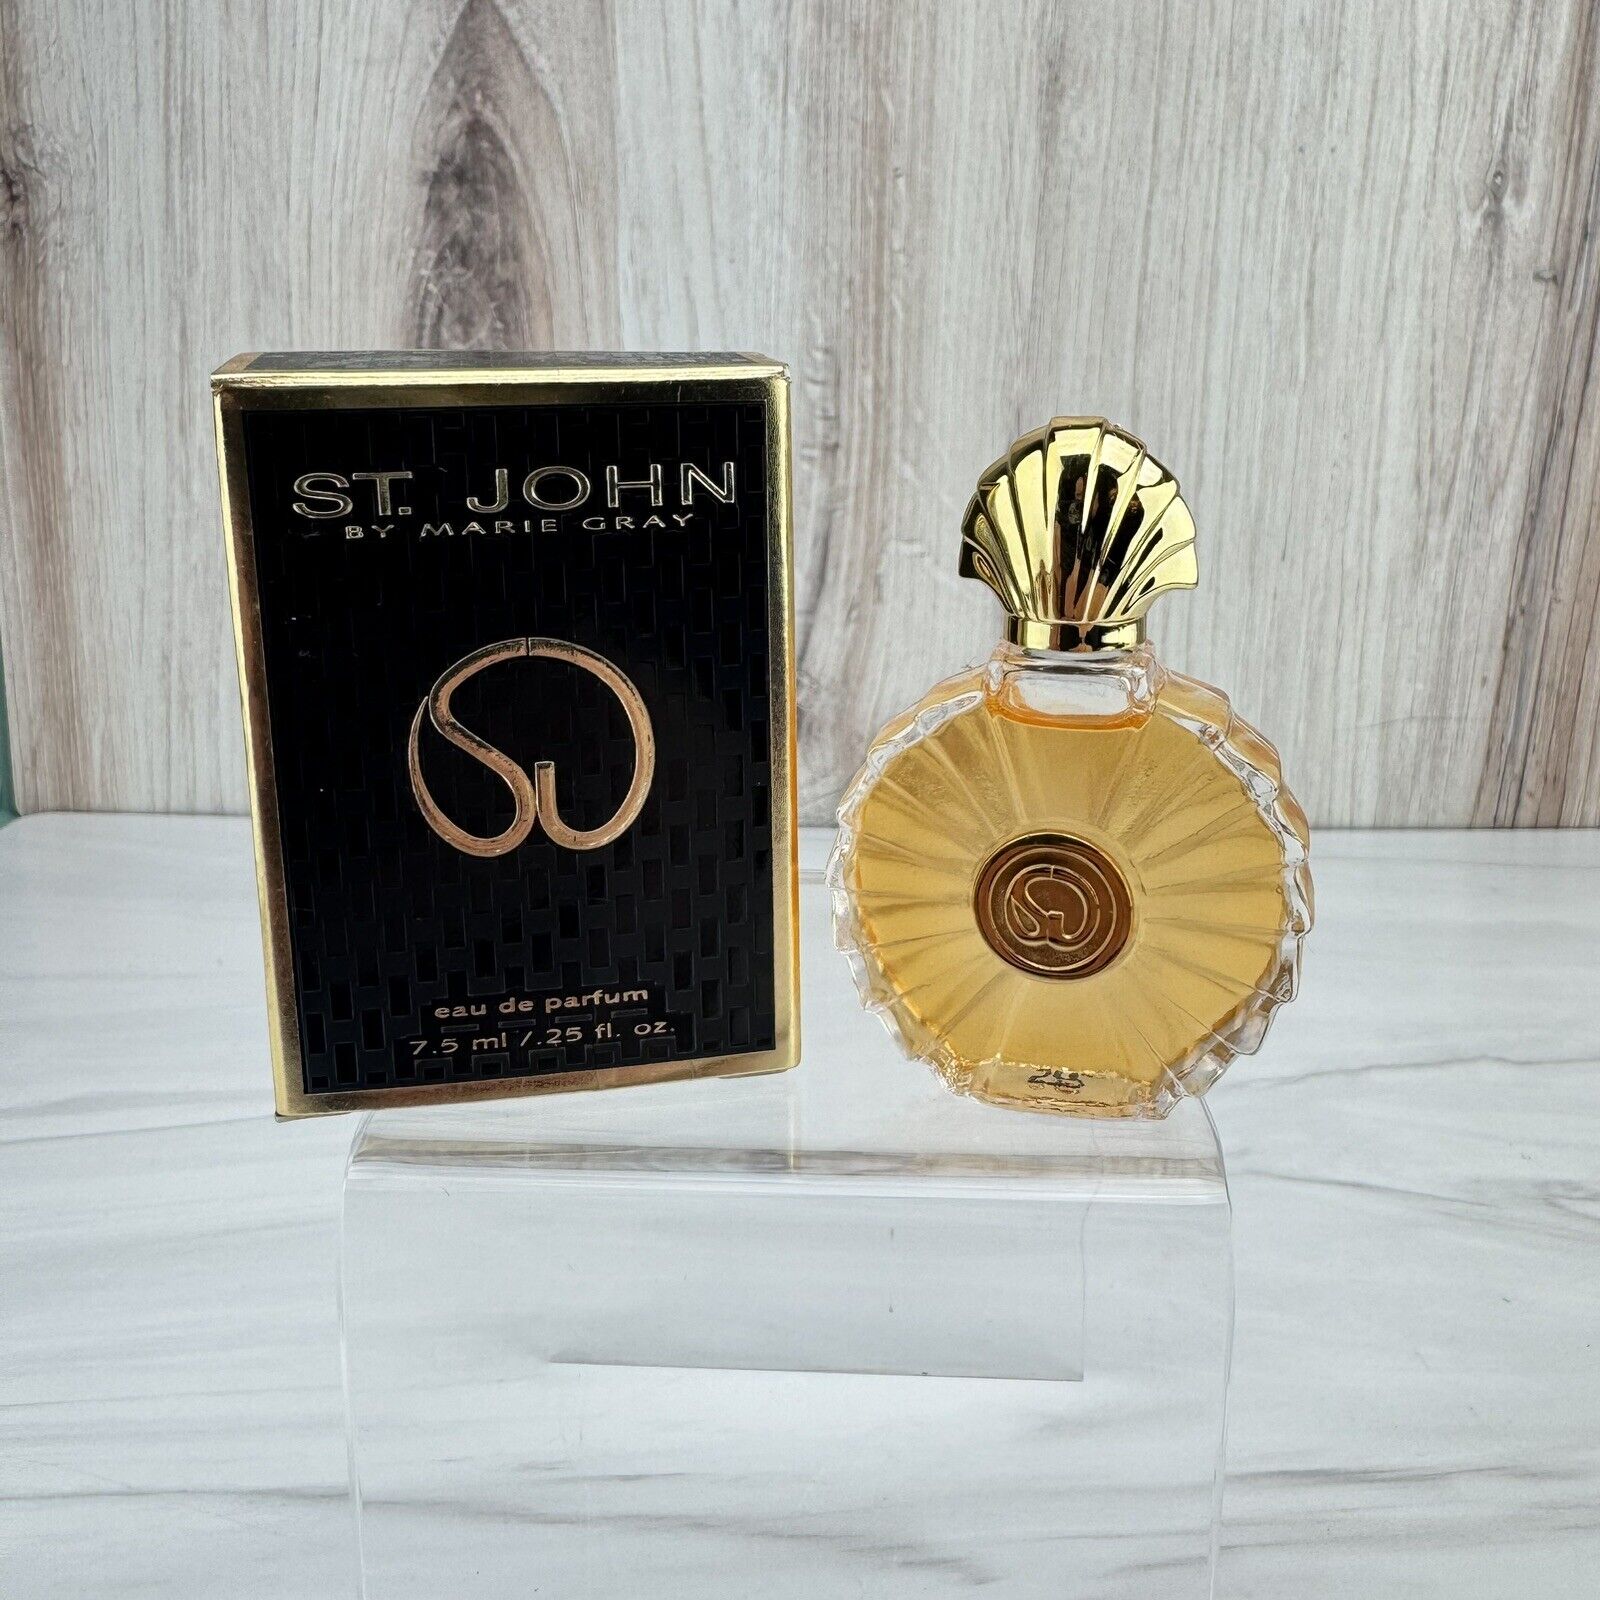 ST. JOHN Marie Gray eau de parfum EDP Perfume Discontinued Rare 7.5M 0.25 oz